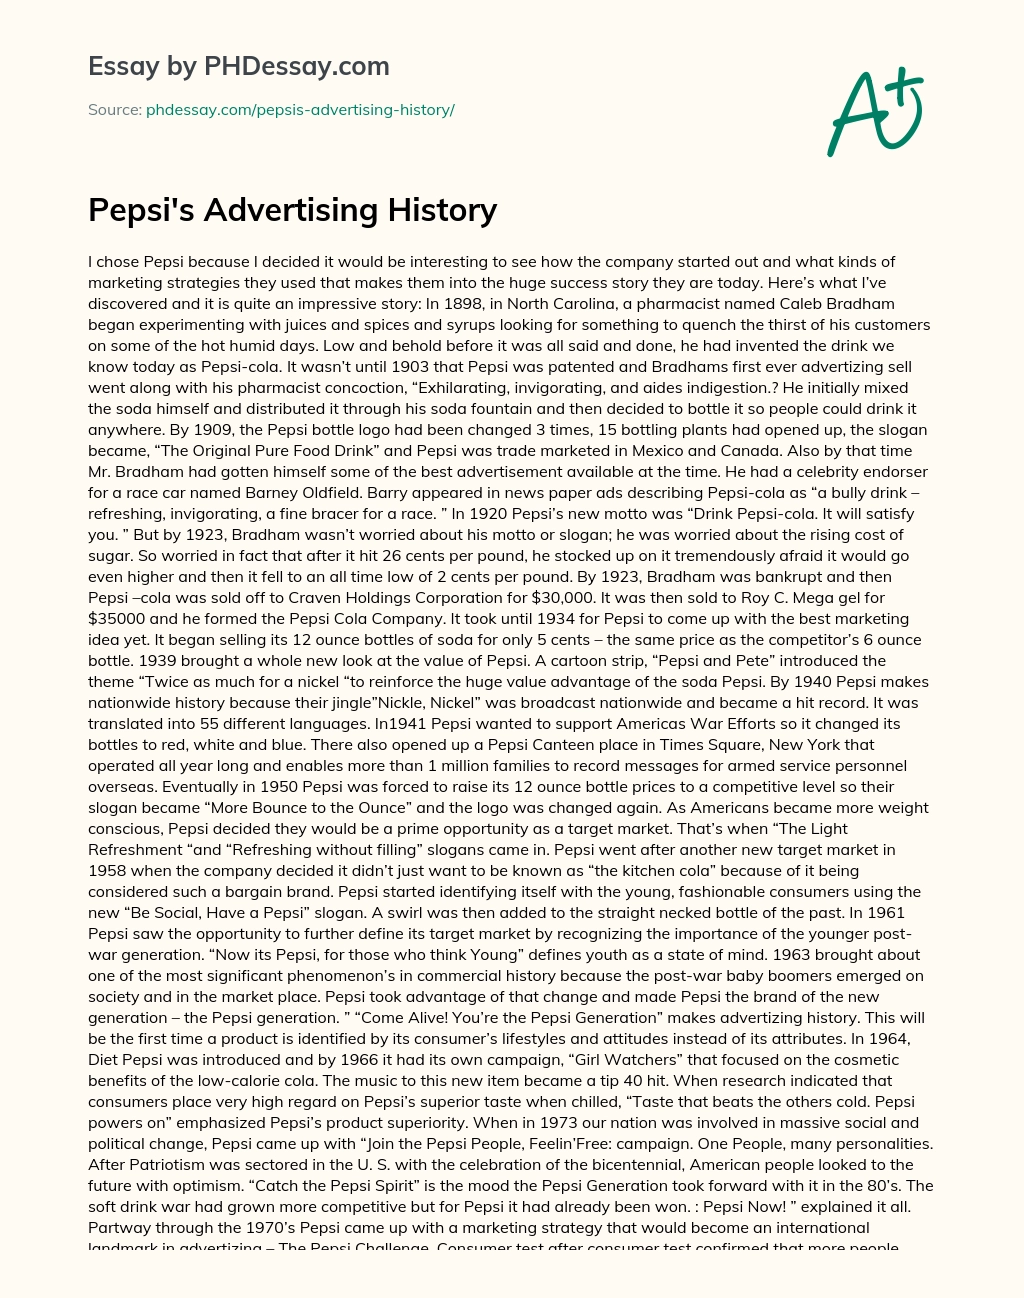 Pepsi’s Advertising History essay